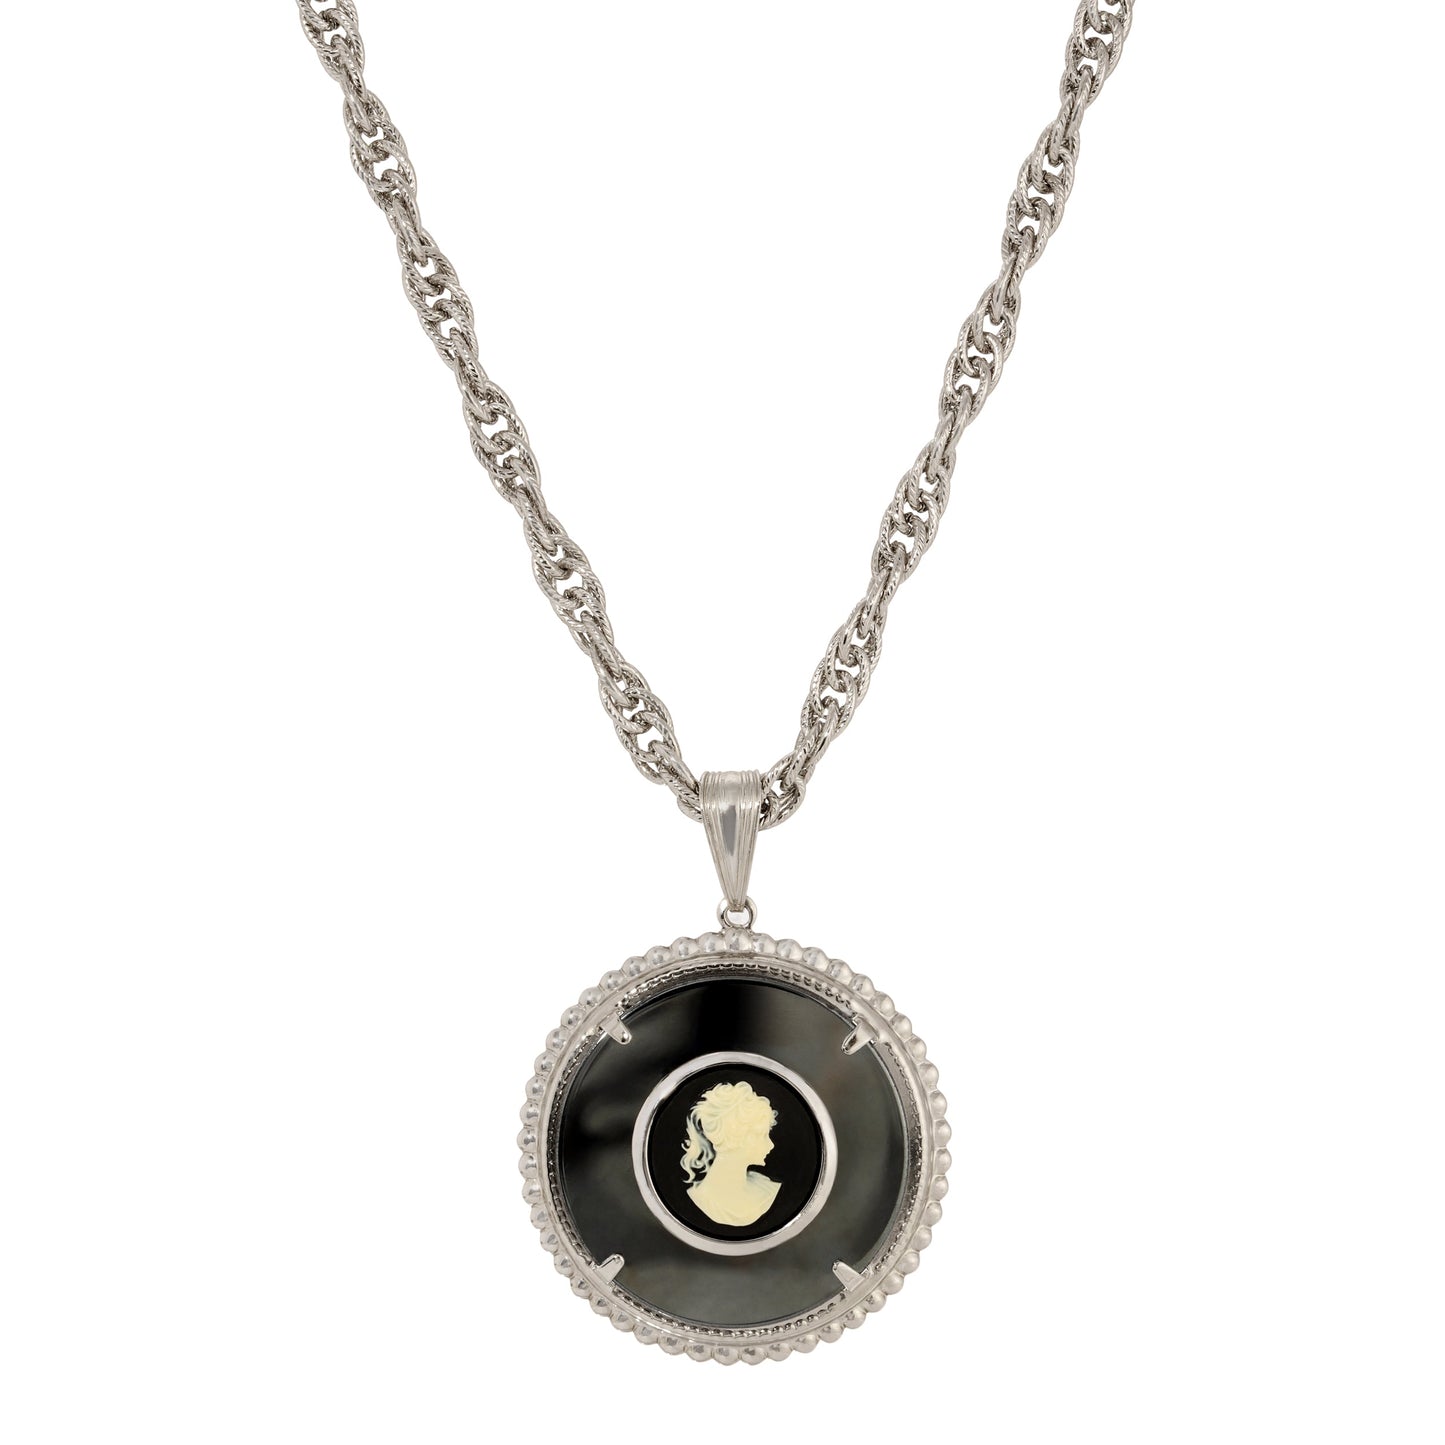 1928 Jewelry Hematite Gemstone Round Black & Ivory Cameo Pendant Necklace 18"L